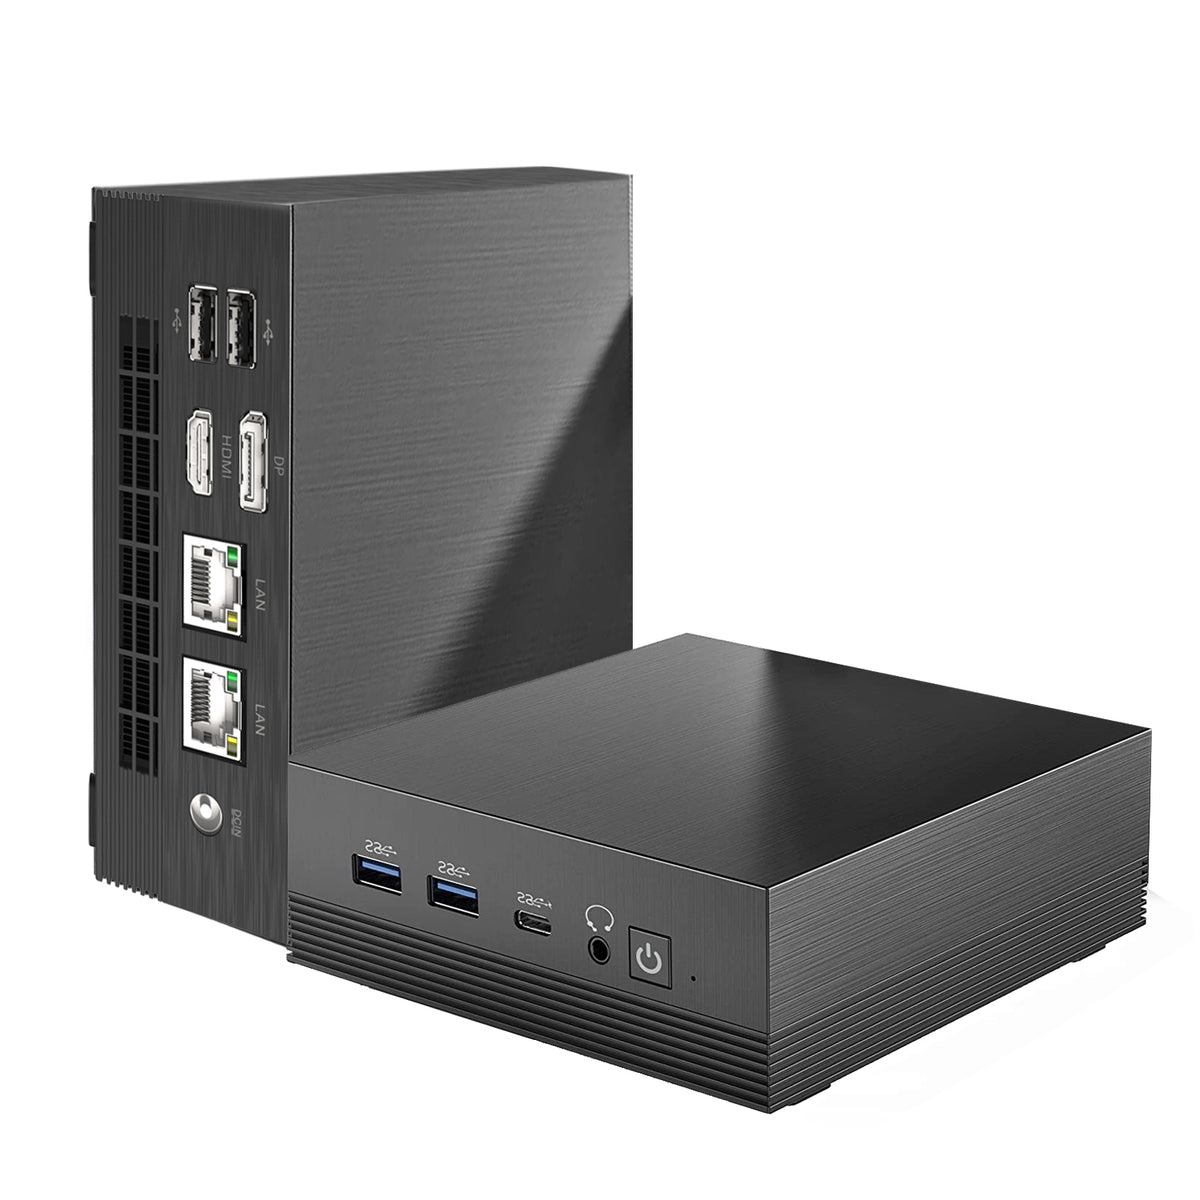 Mini PC , AMD A9 9400 (up to 3.2 Ghz) Mini Desktop Computers, 8GB RAM –  ATOPNUC